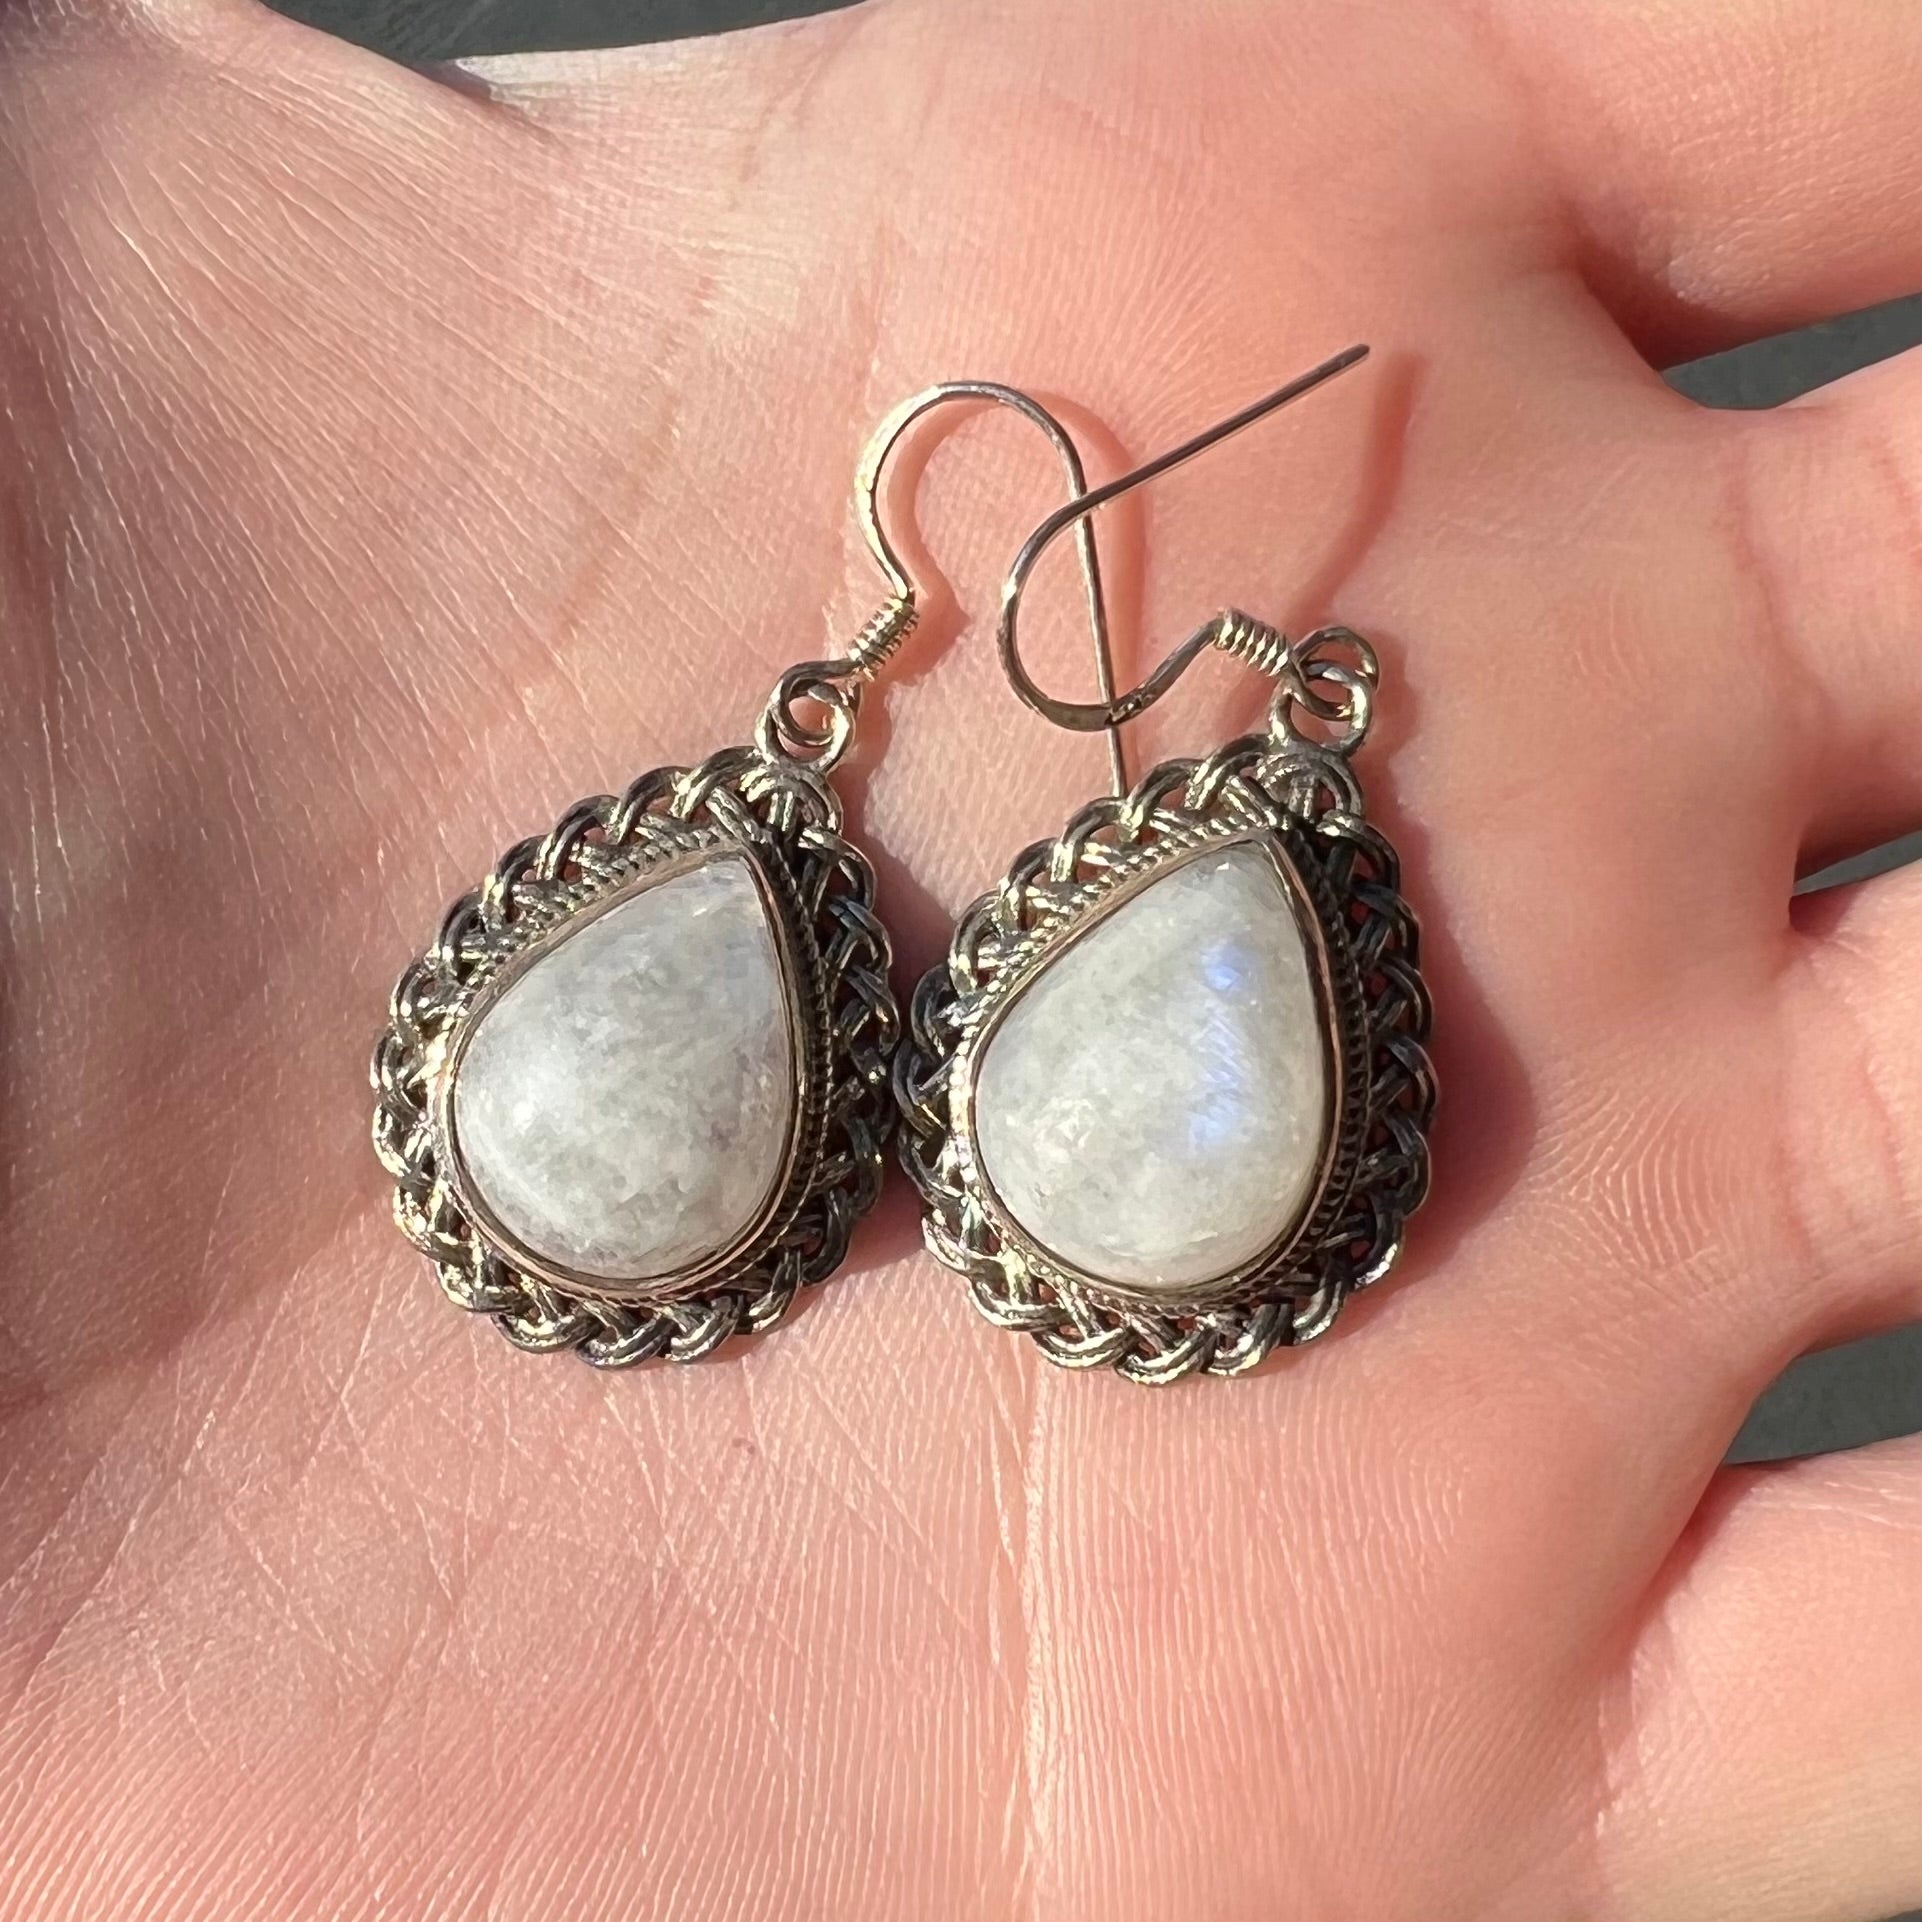 Silver filigree dangle wire earrings set with pear shape moonstones.